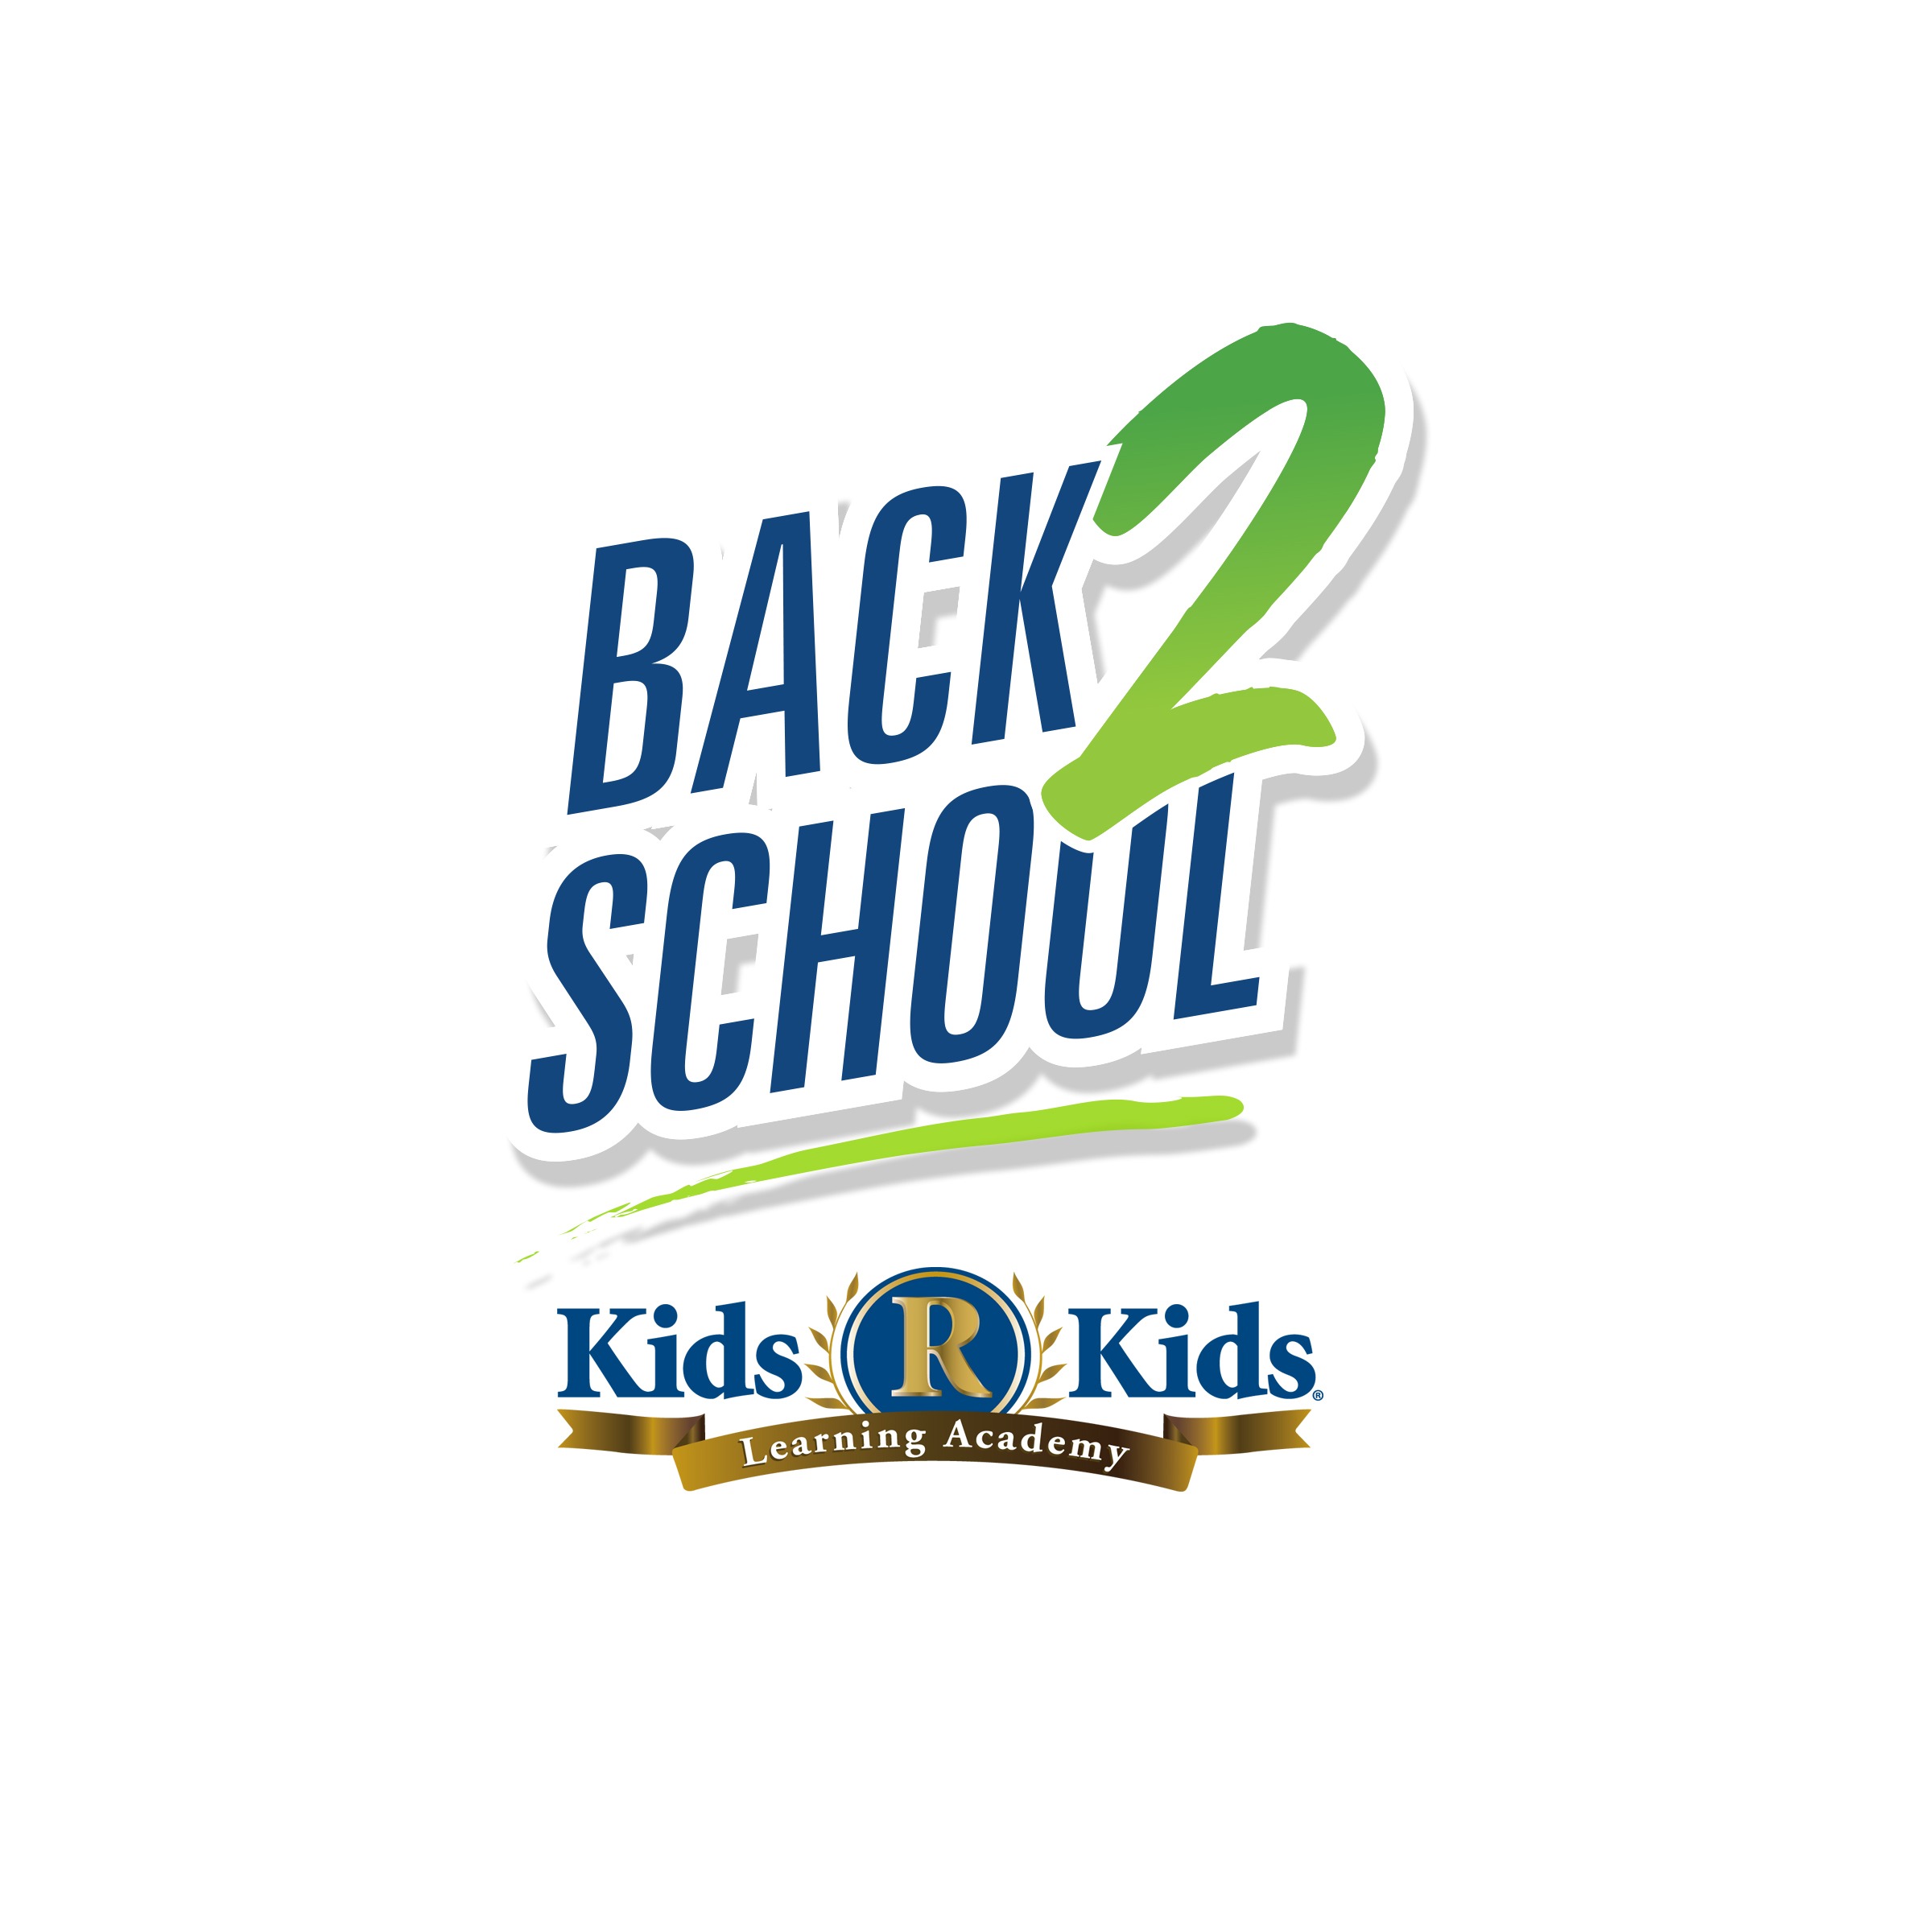 Kids R Kids Back To School